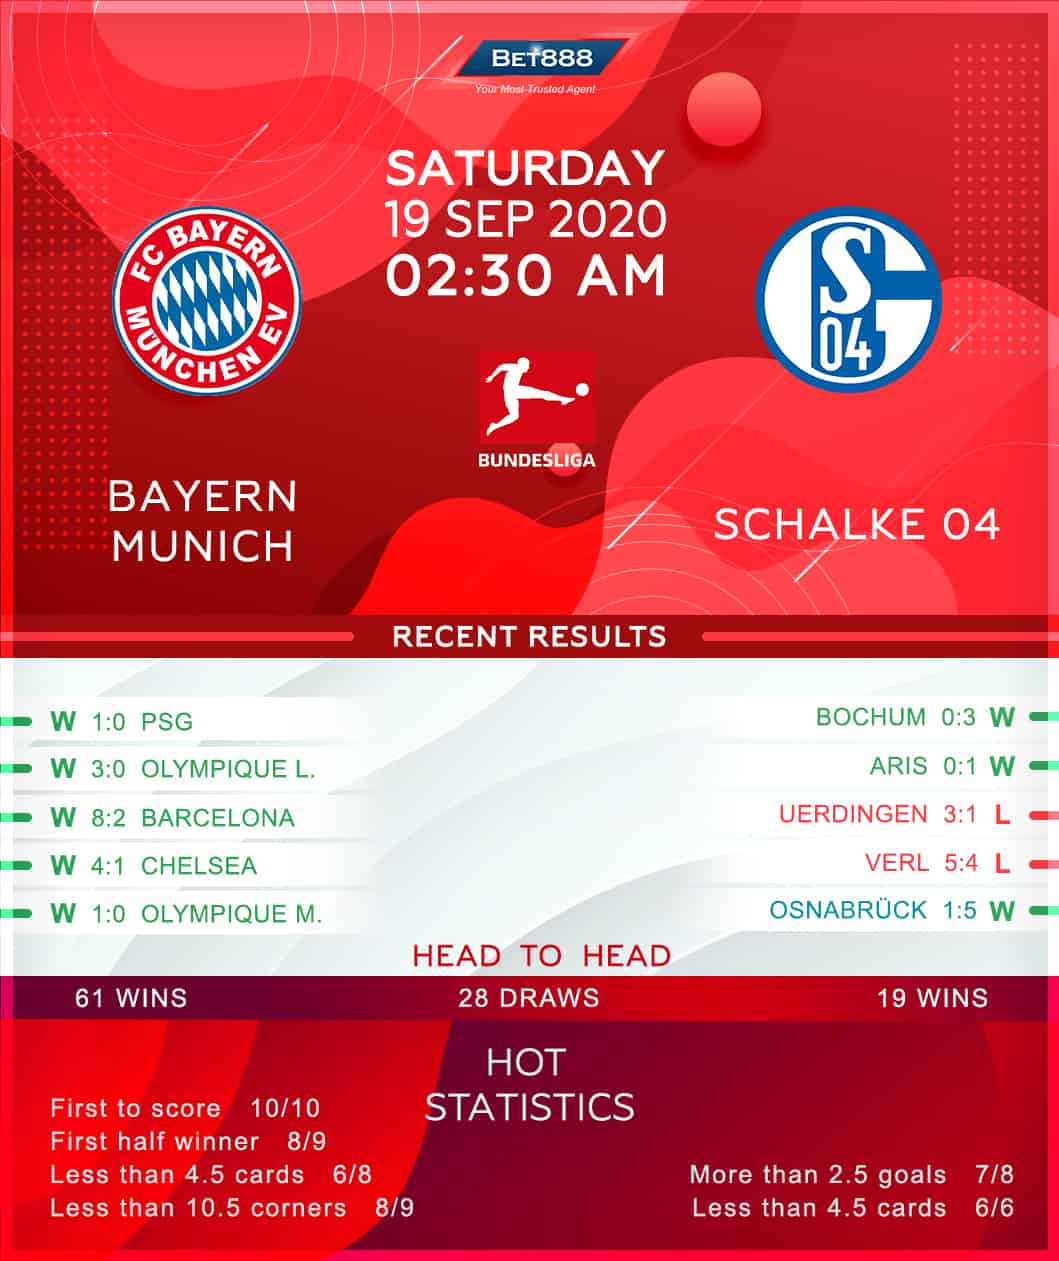 Bayern Munich vs Schalke 04 19/09/20